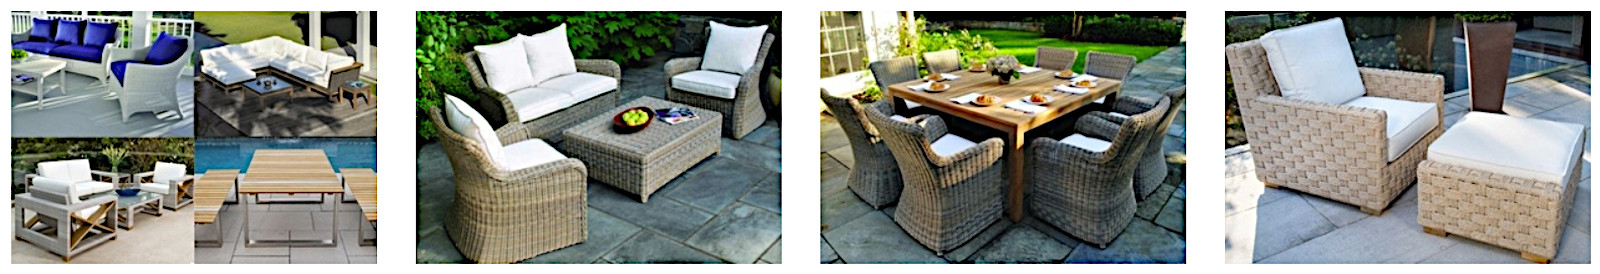 Cheap Kingsley Bate teak garden furniture